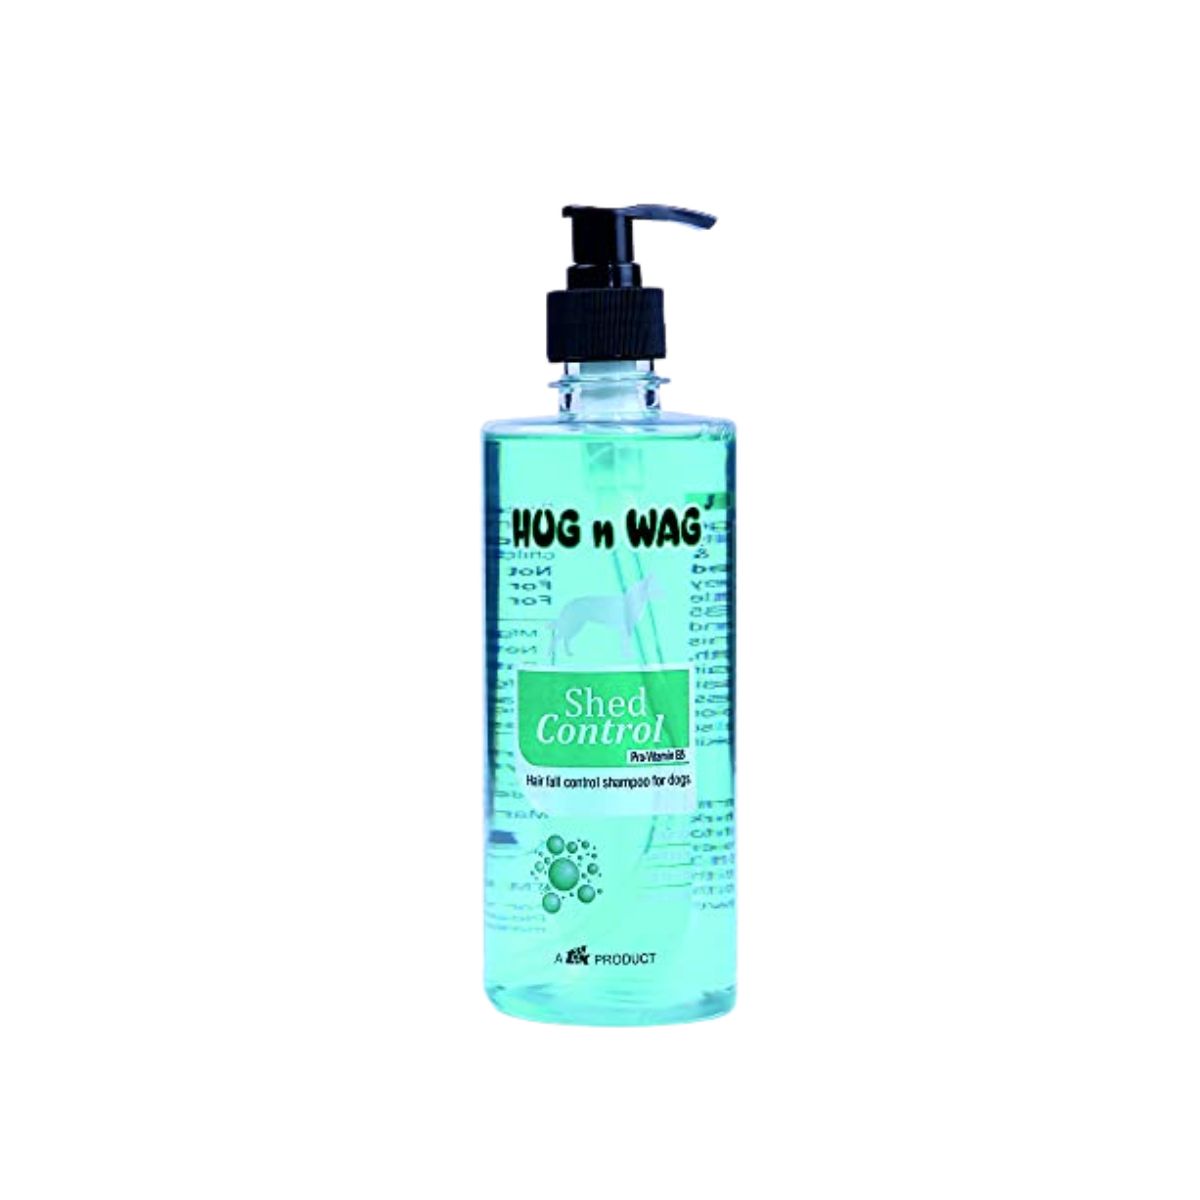 Hug n Wag - Shed Control Shampoo - 500 ml